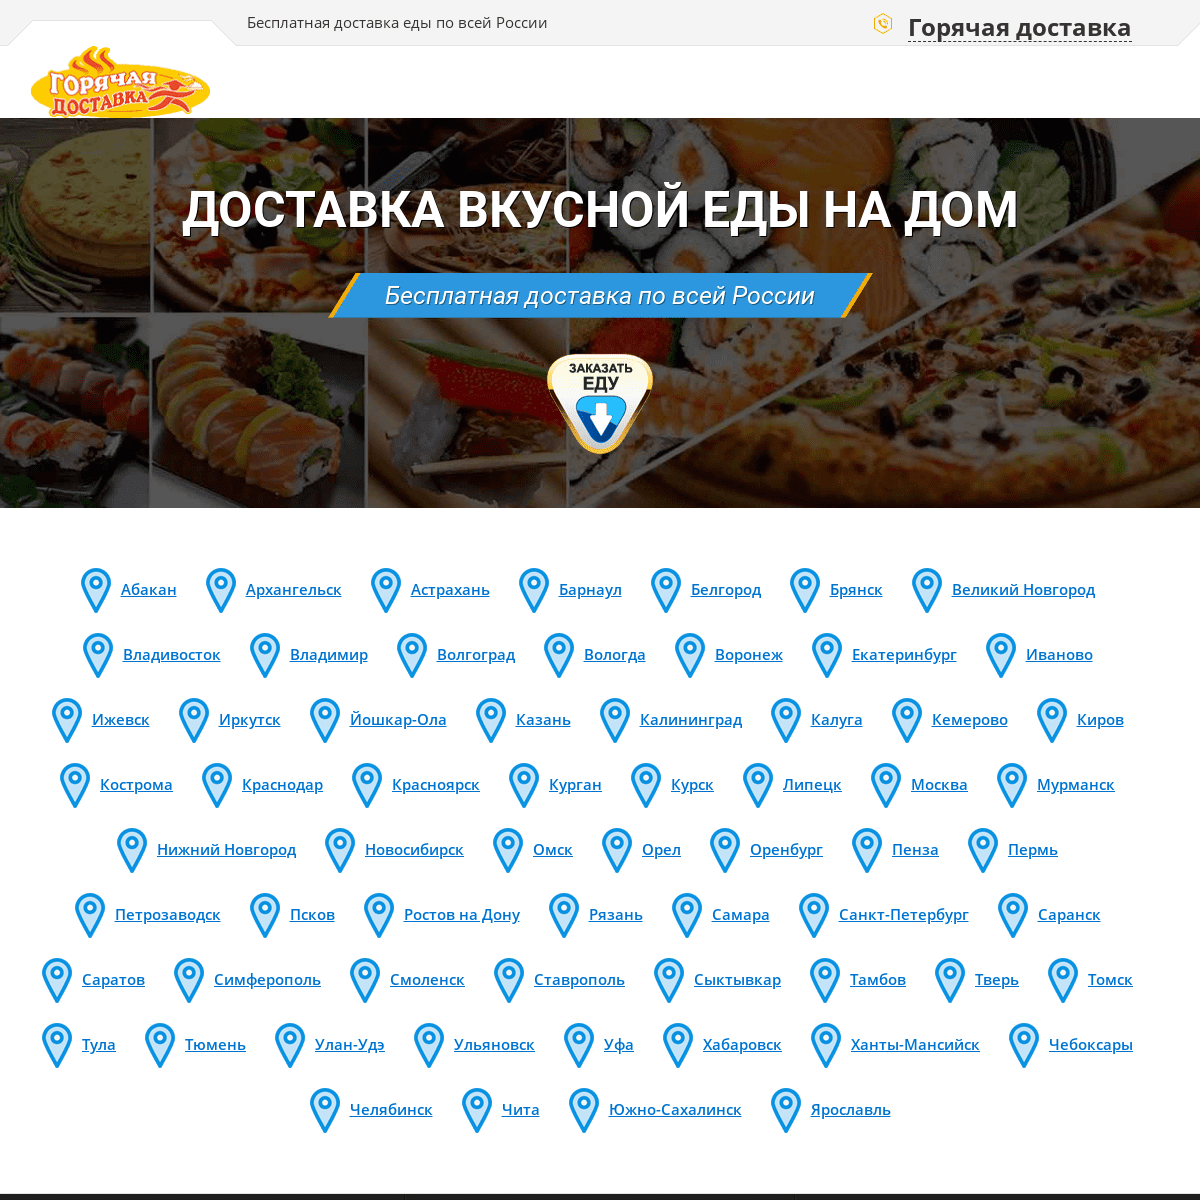 A complete backup of free-dostavka.ru